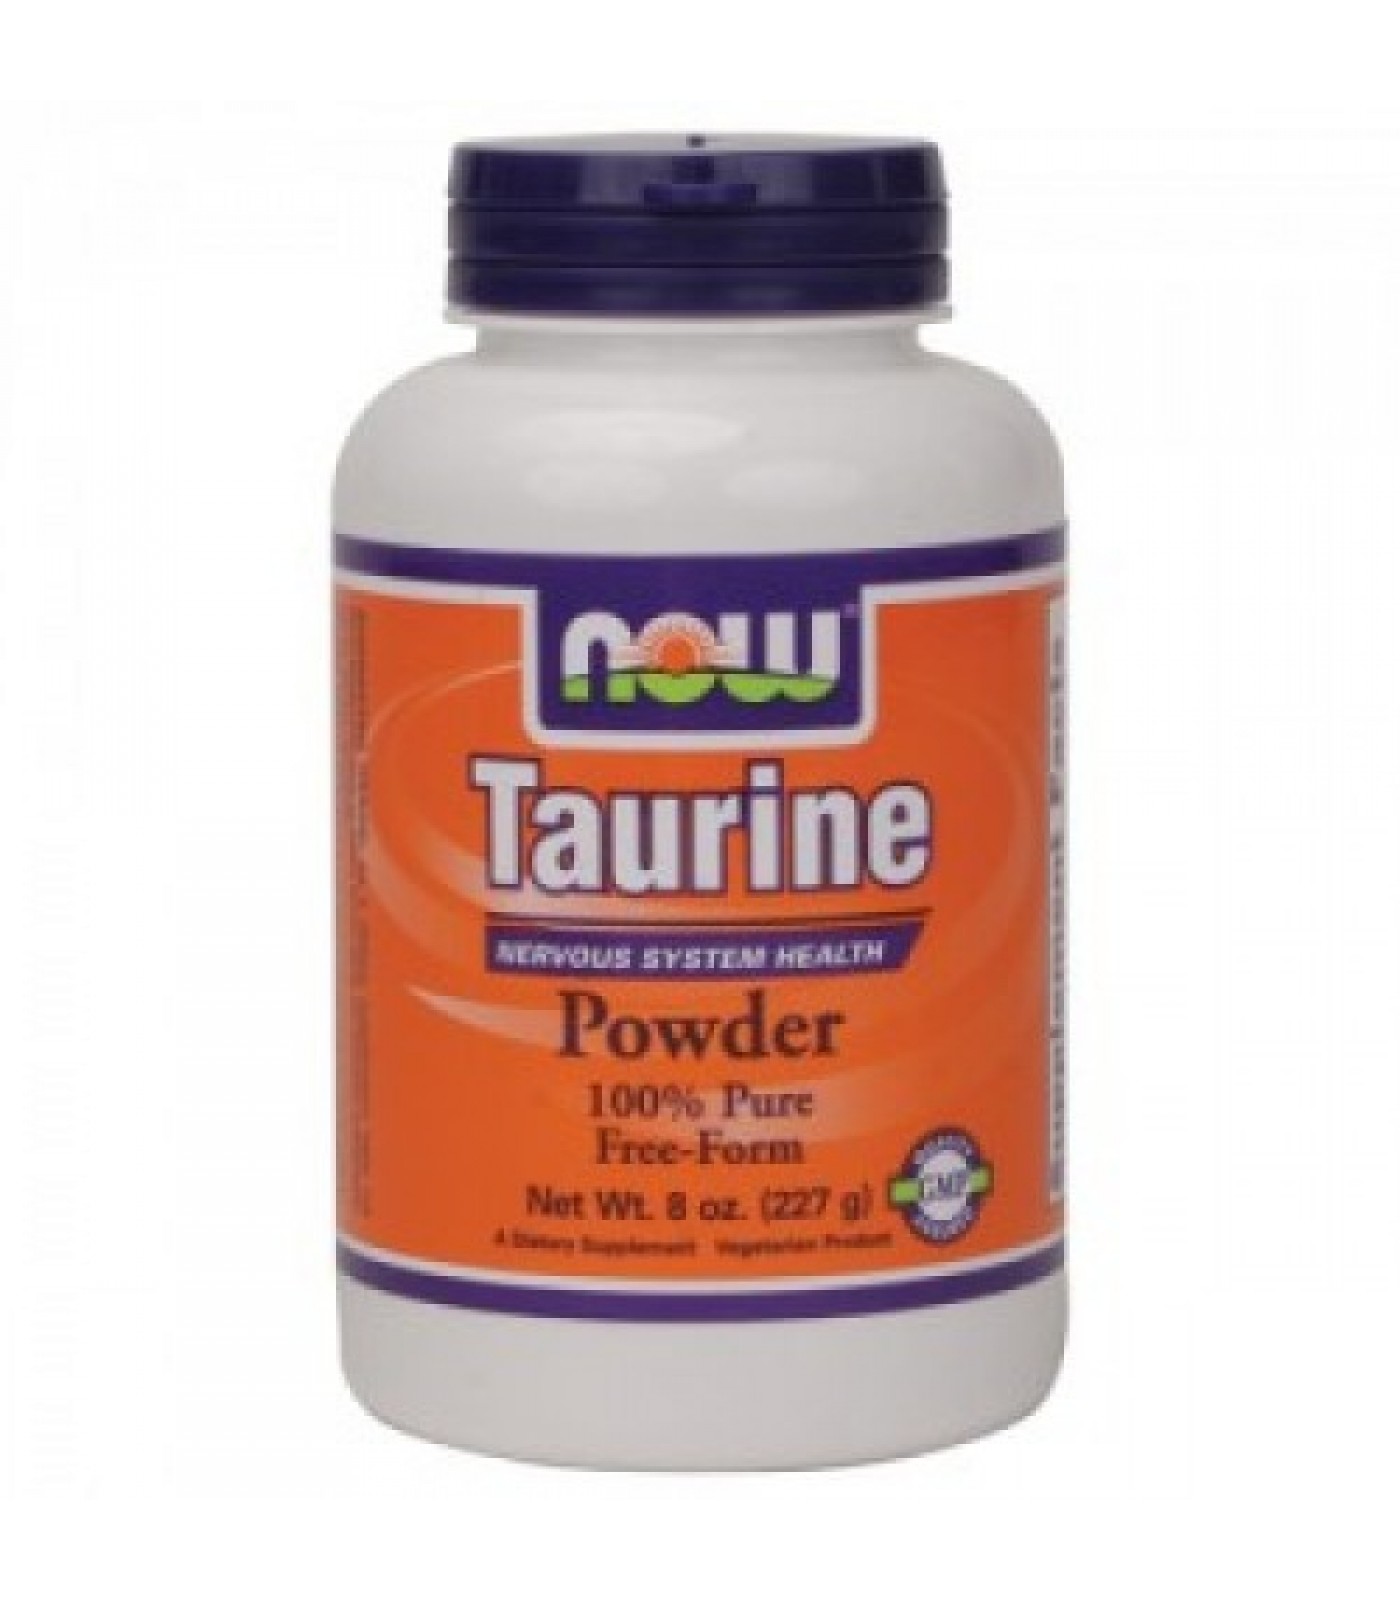 taurine powder australia